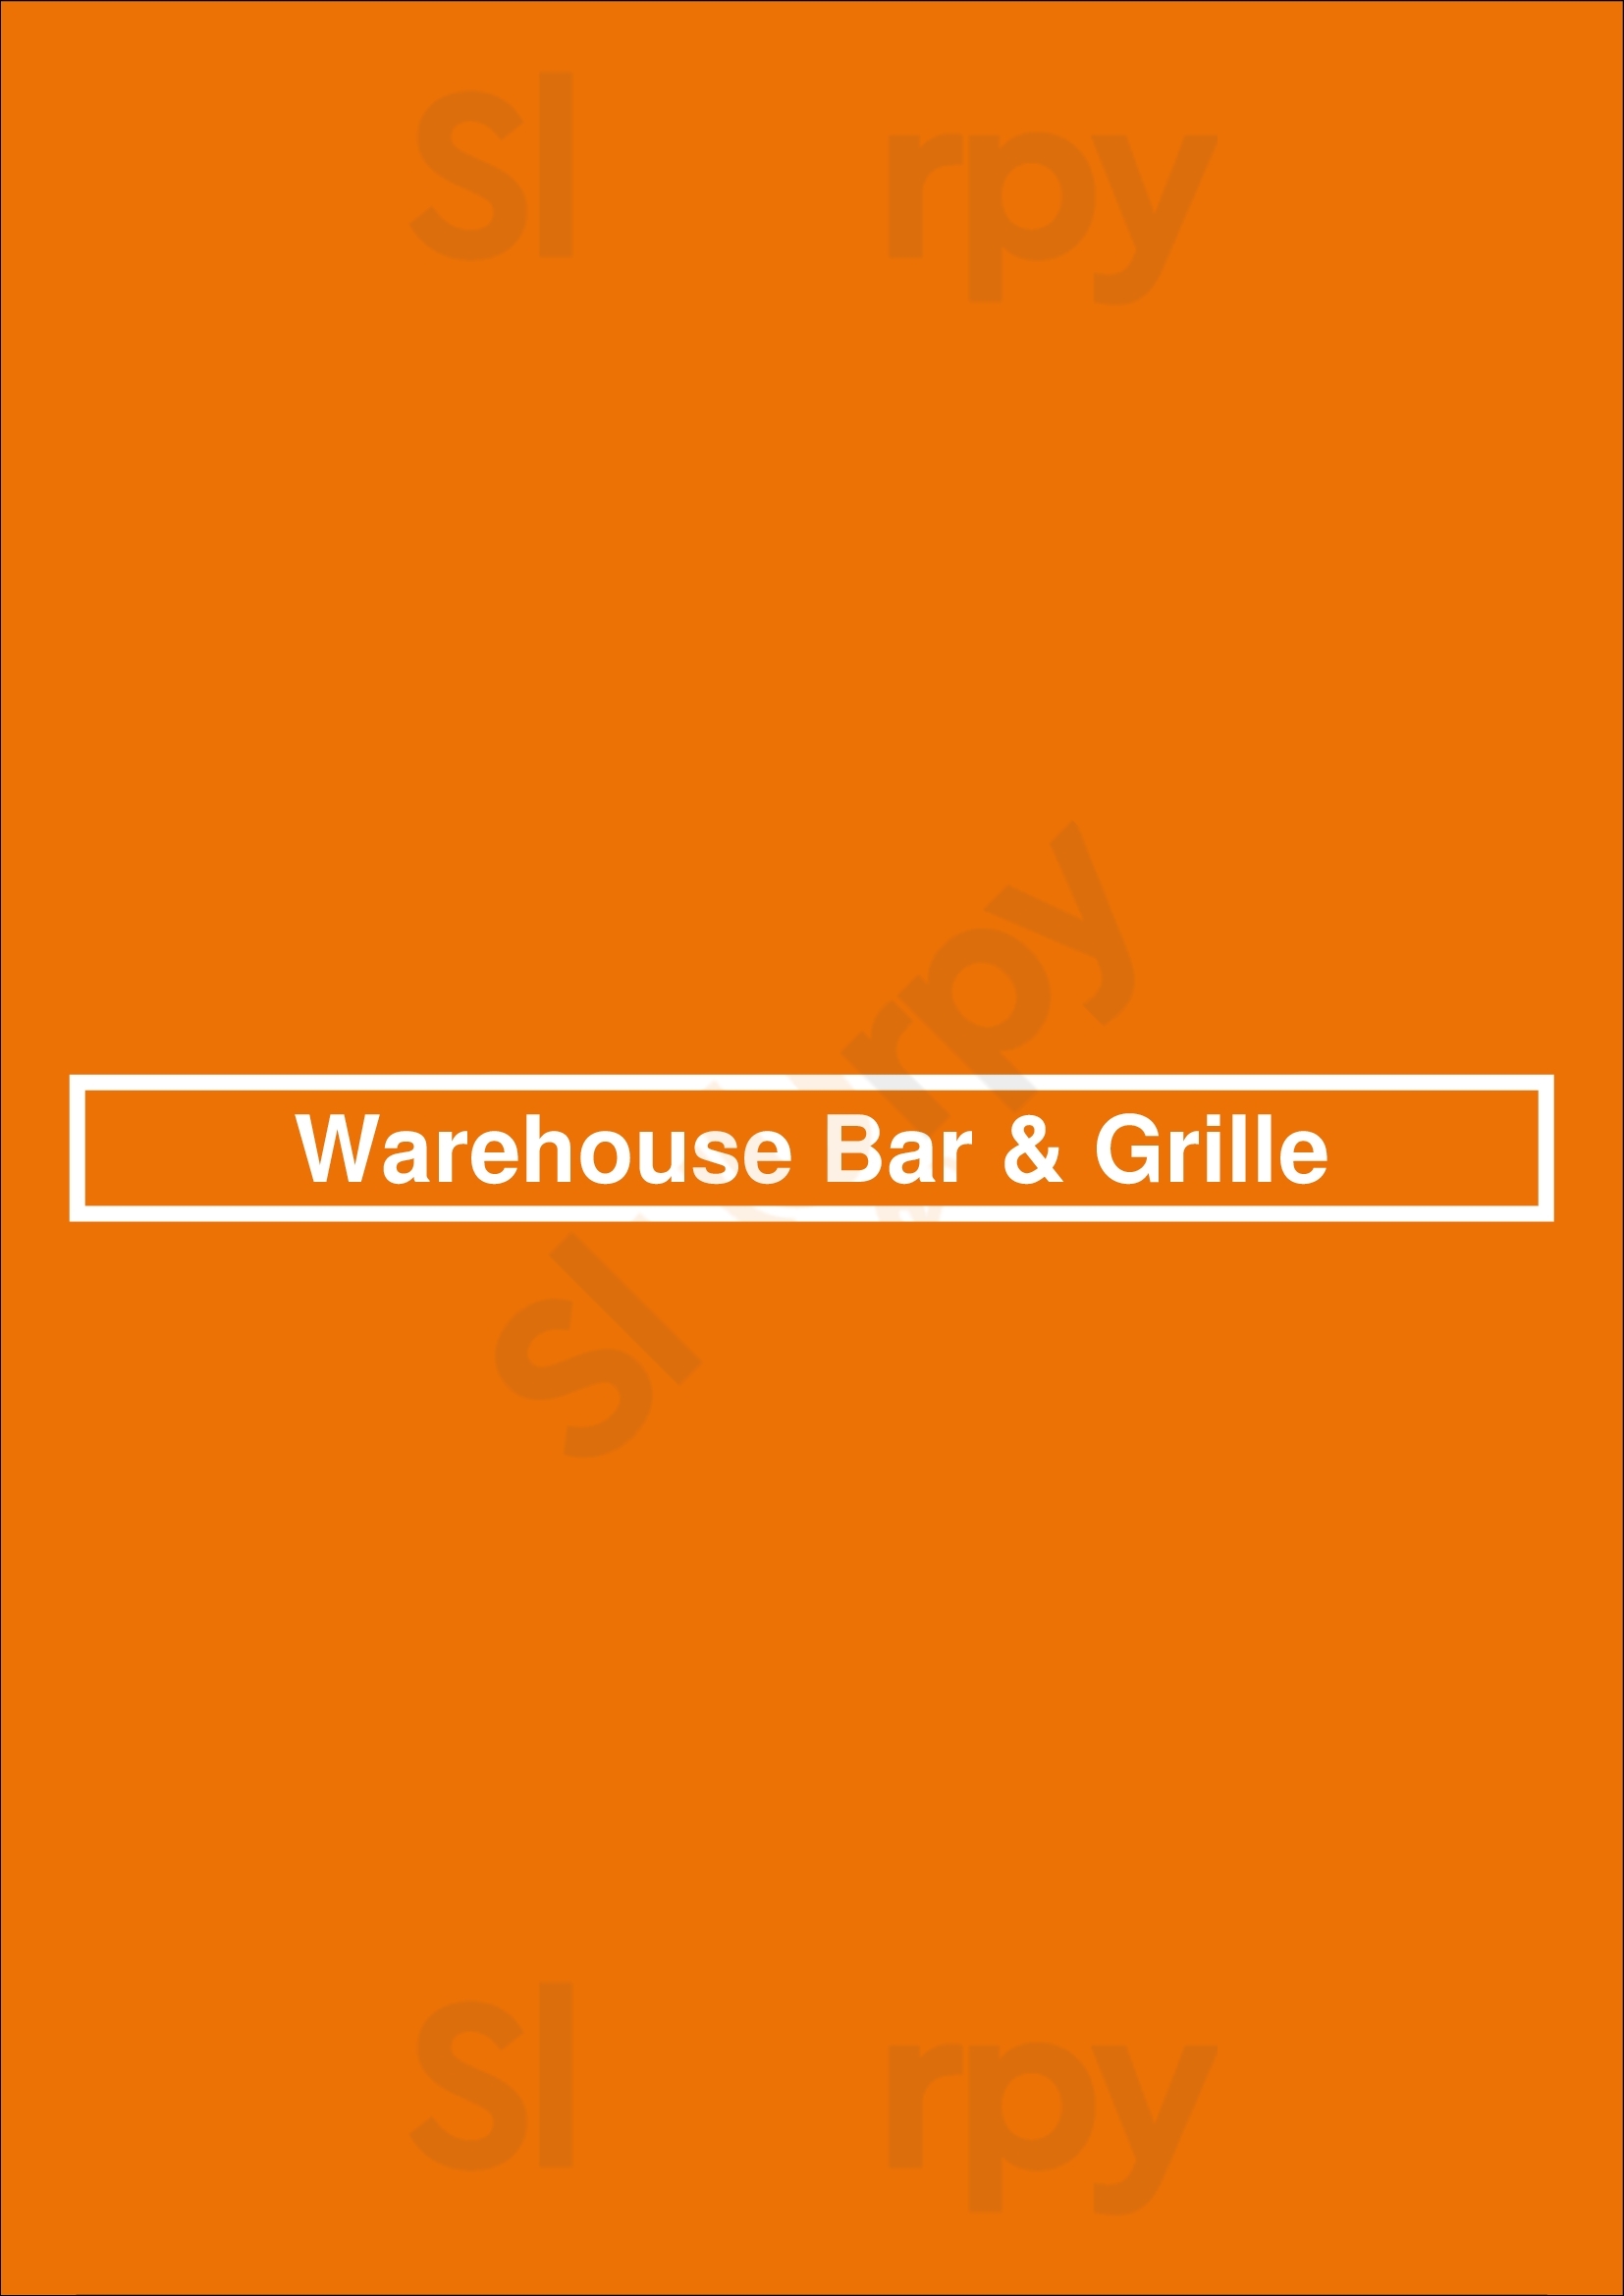 Warehouse Bar & Grille Boston Menu - 1